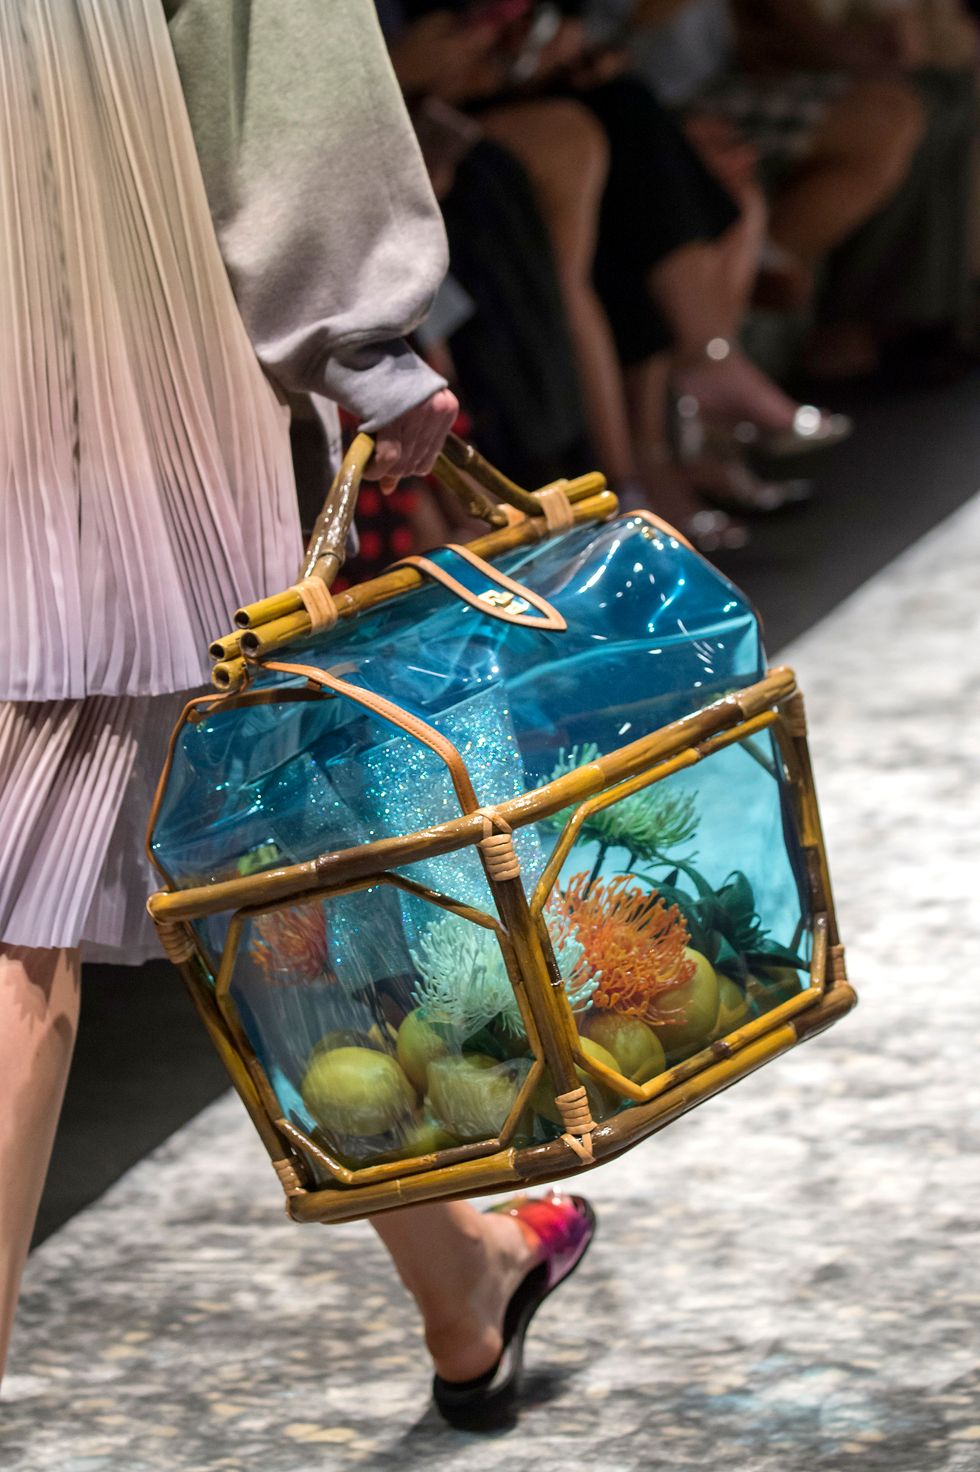 The Top 10 Designer Bags Of 2019